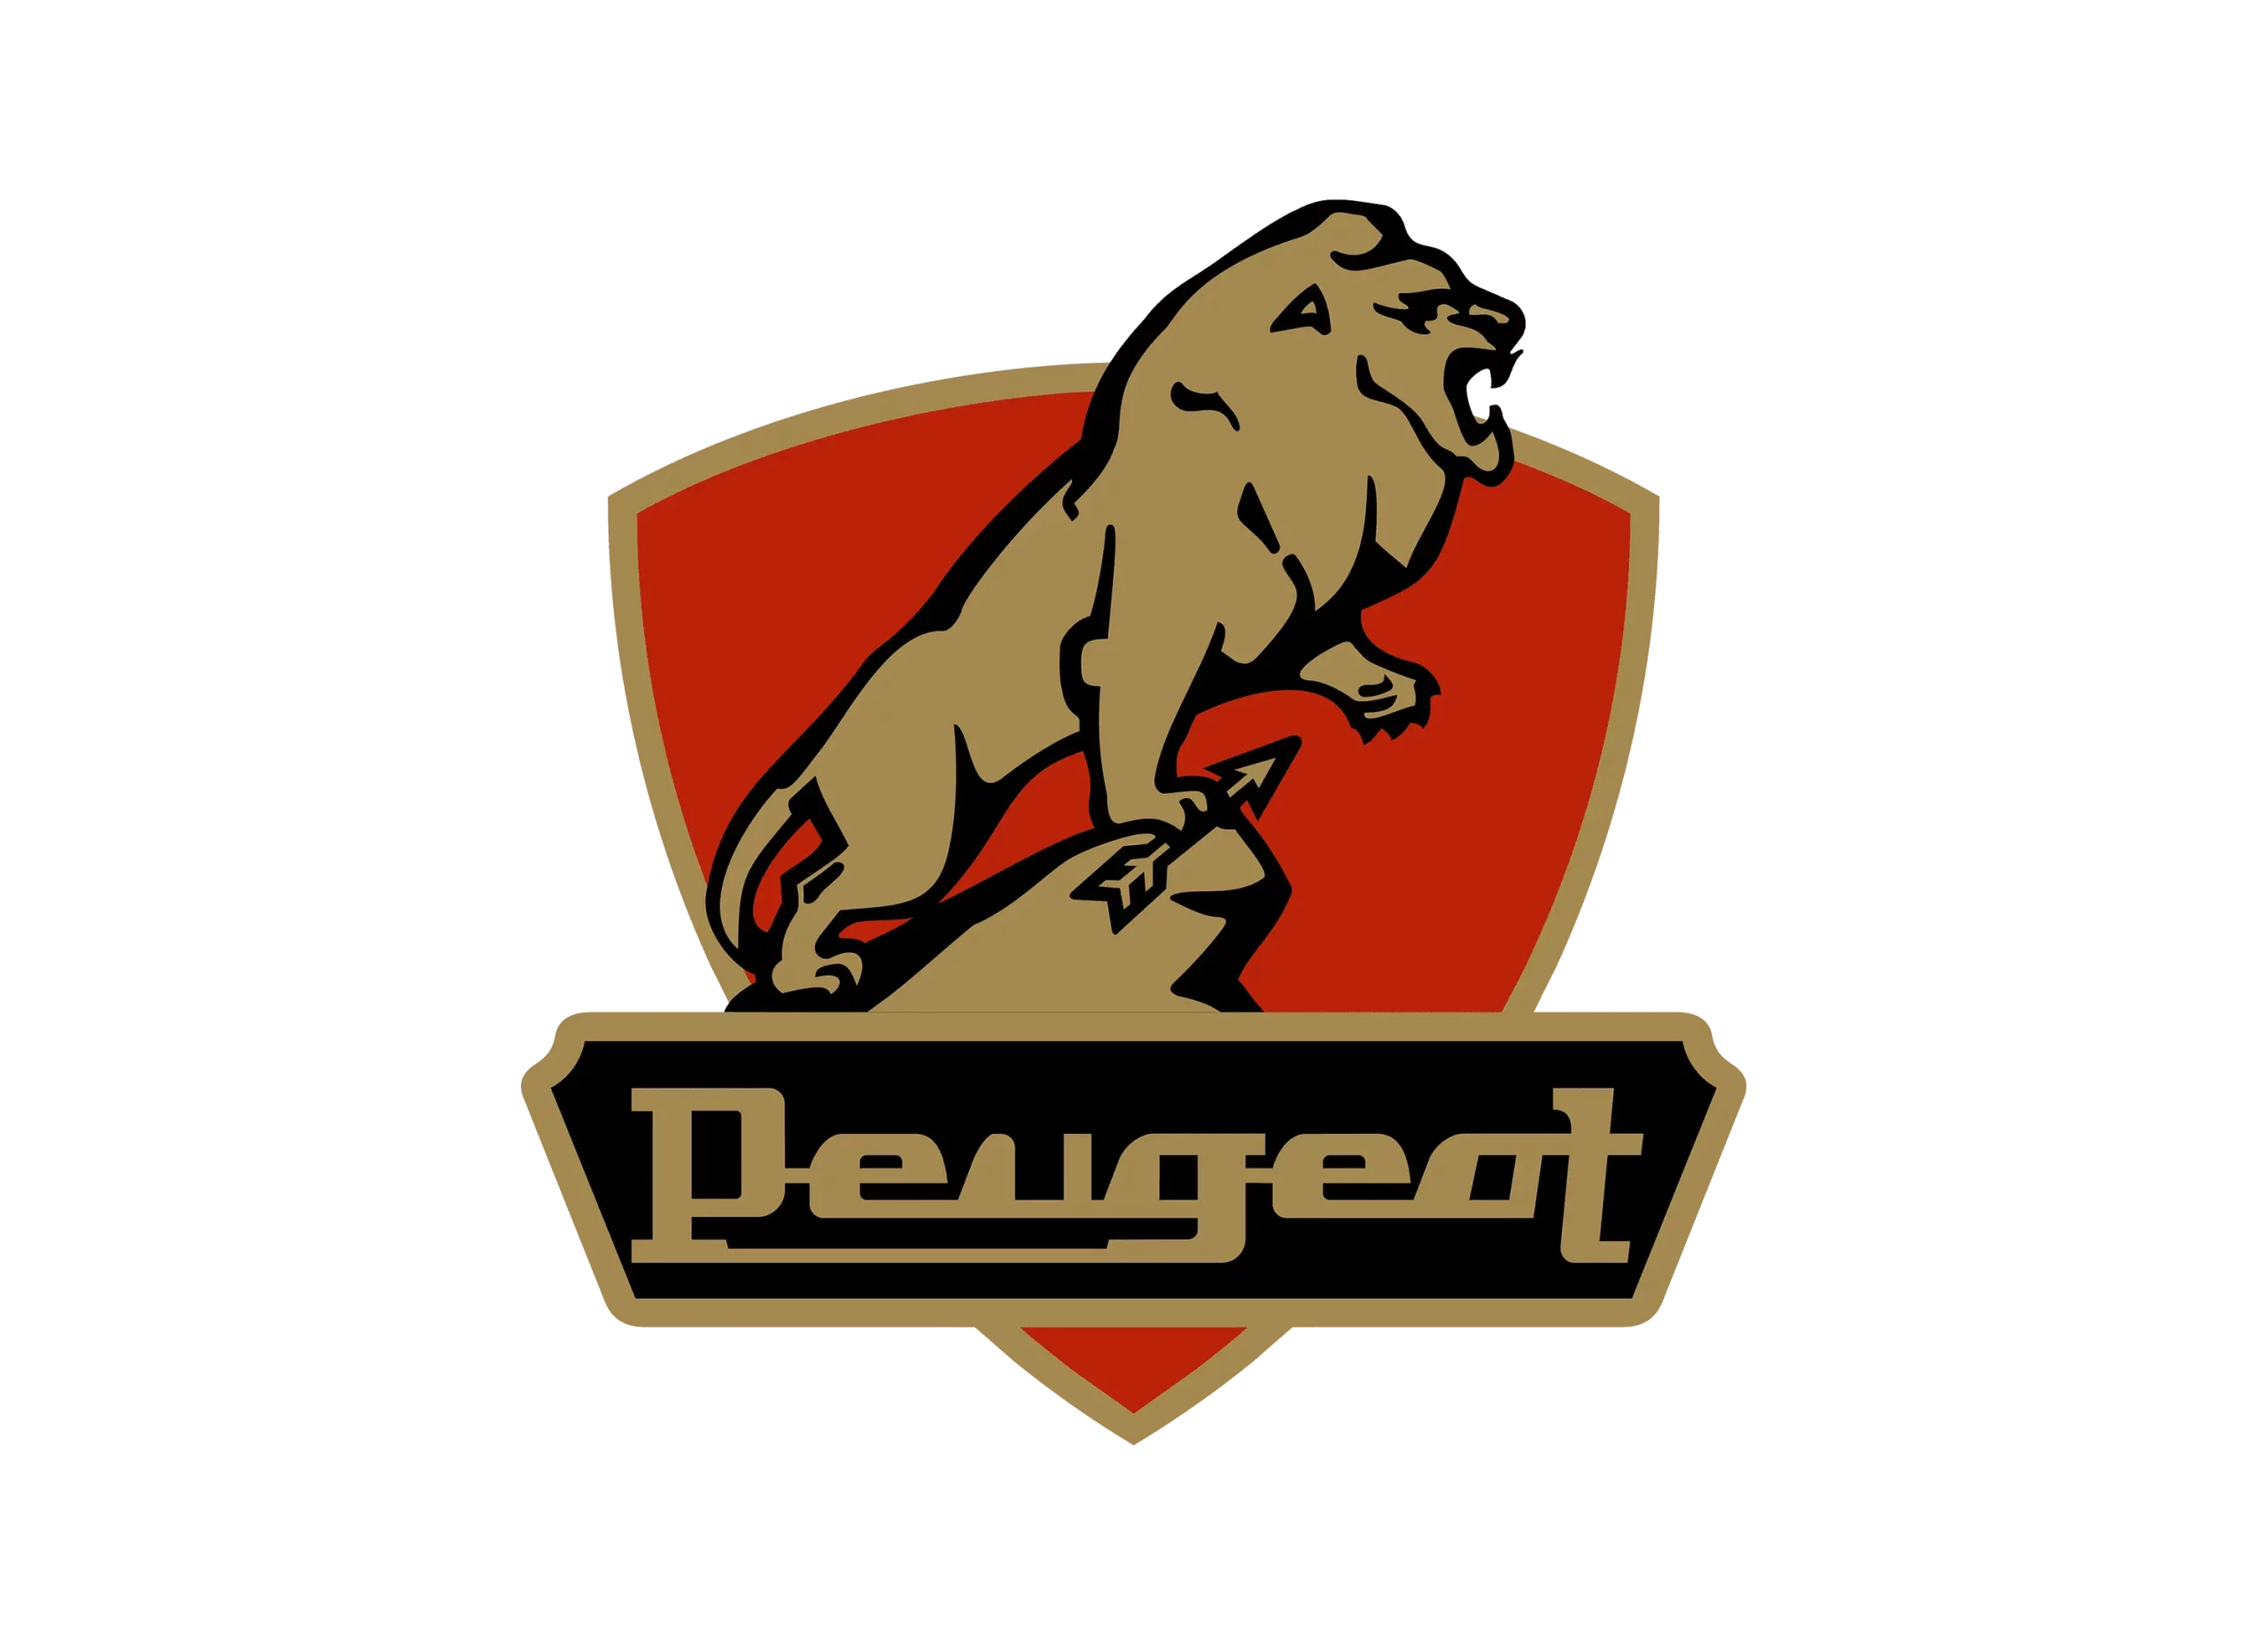 Peugeot logo 1927-1936